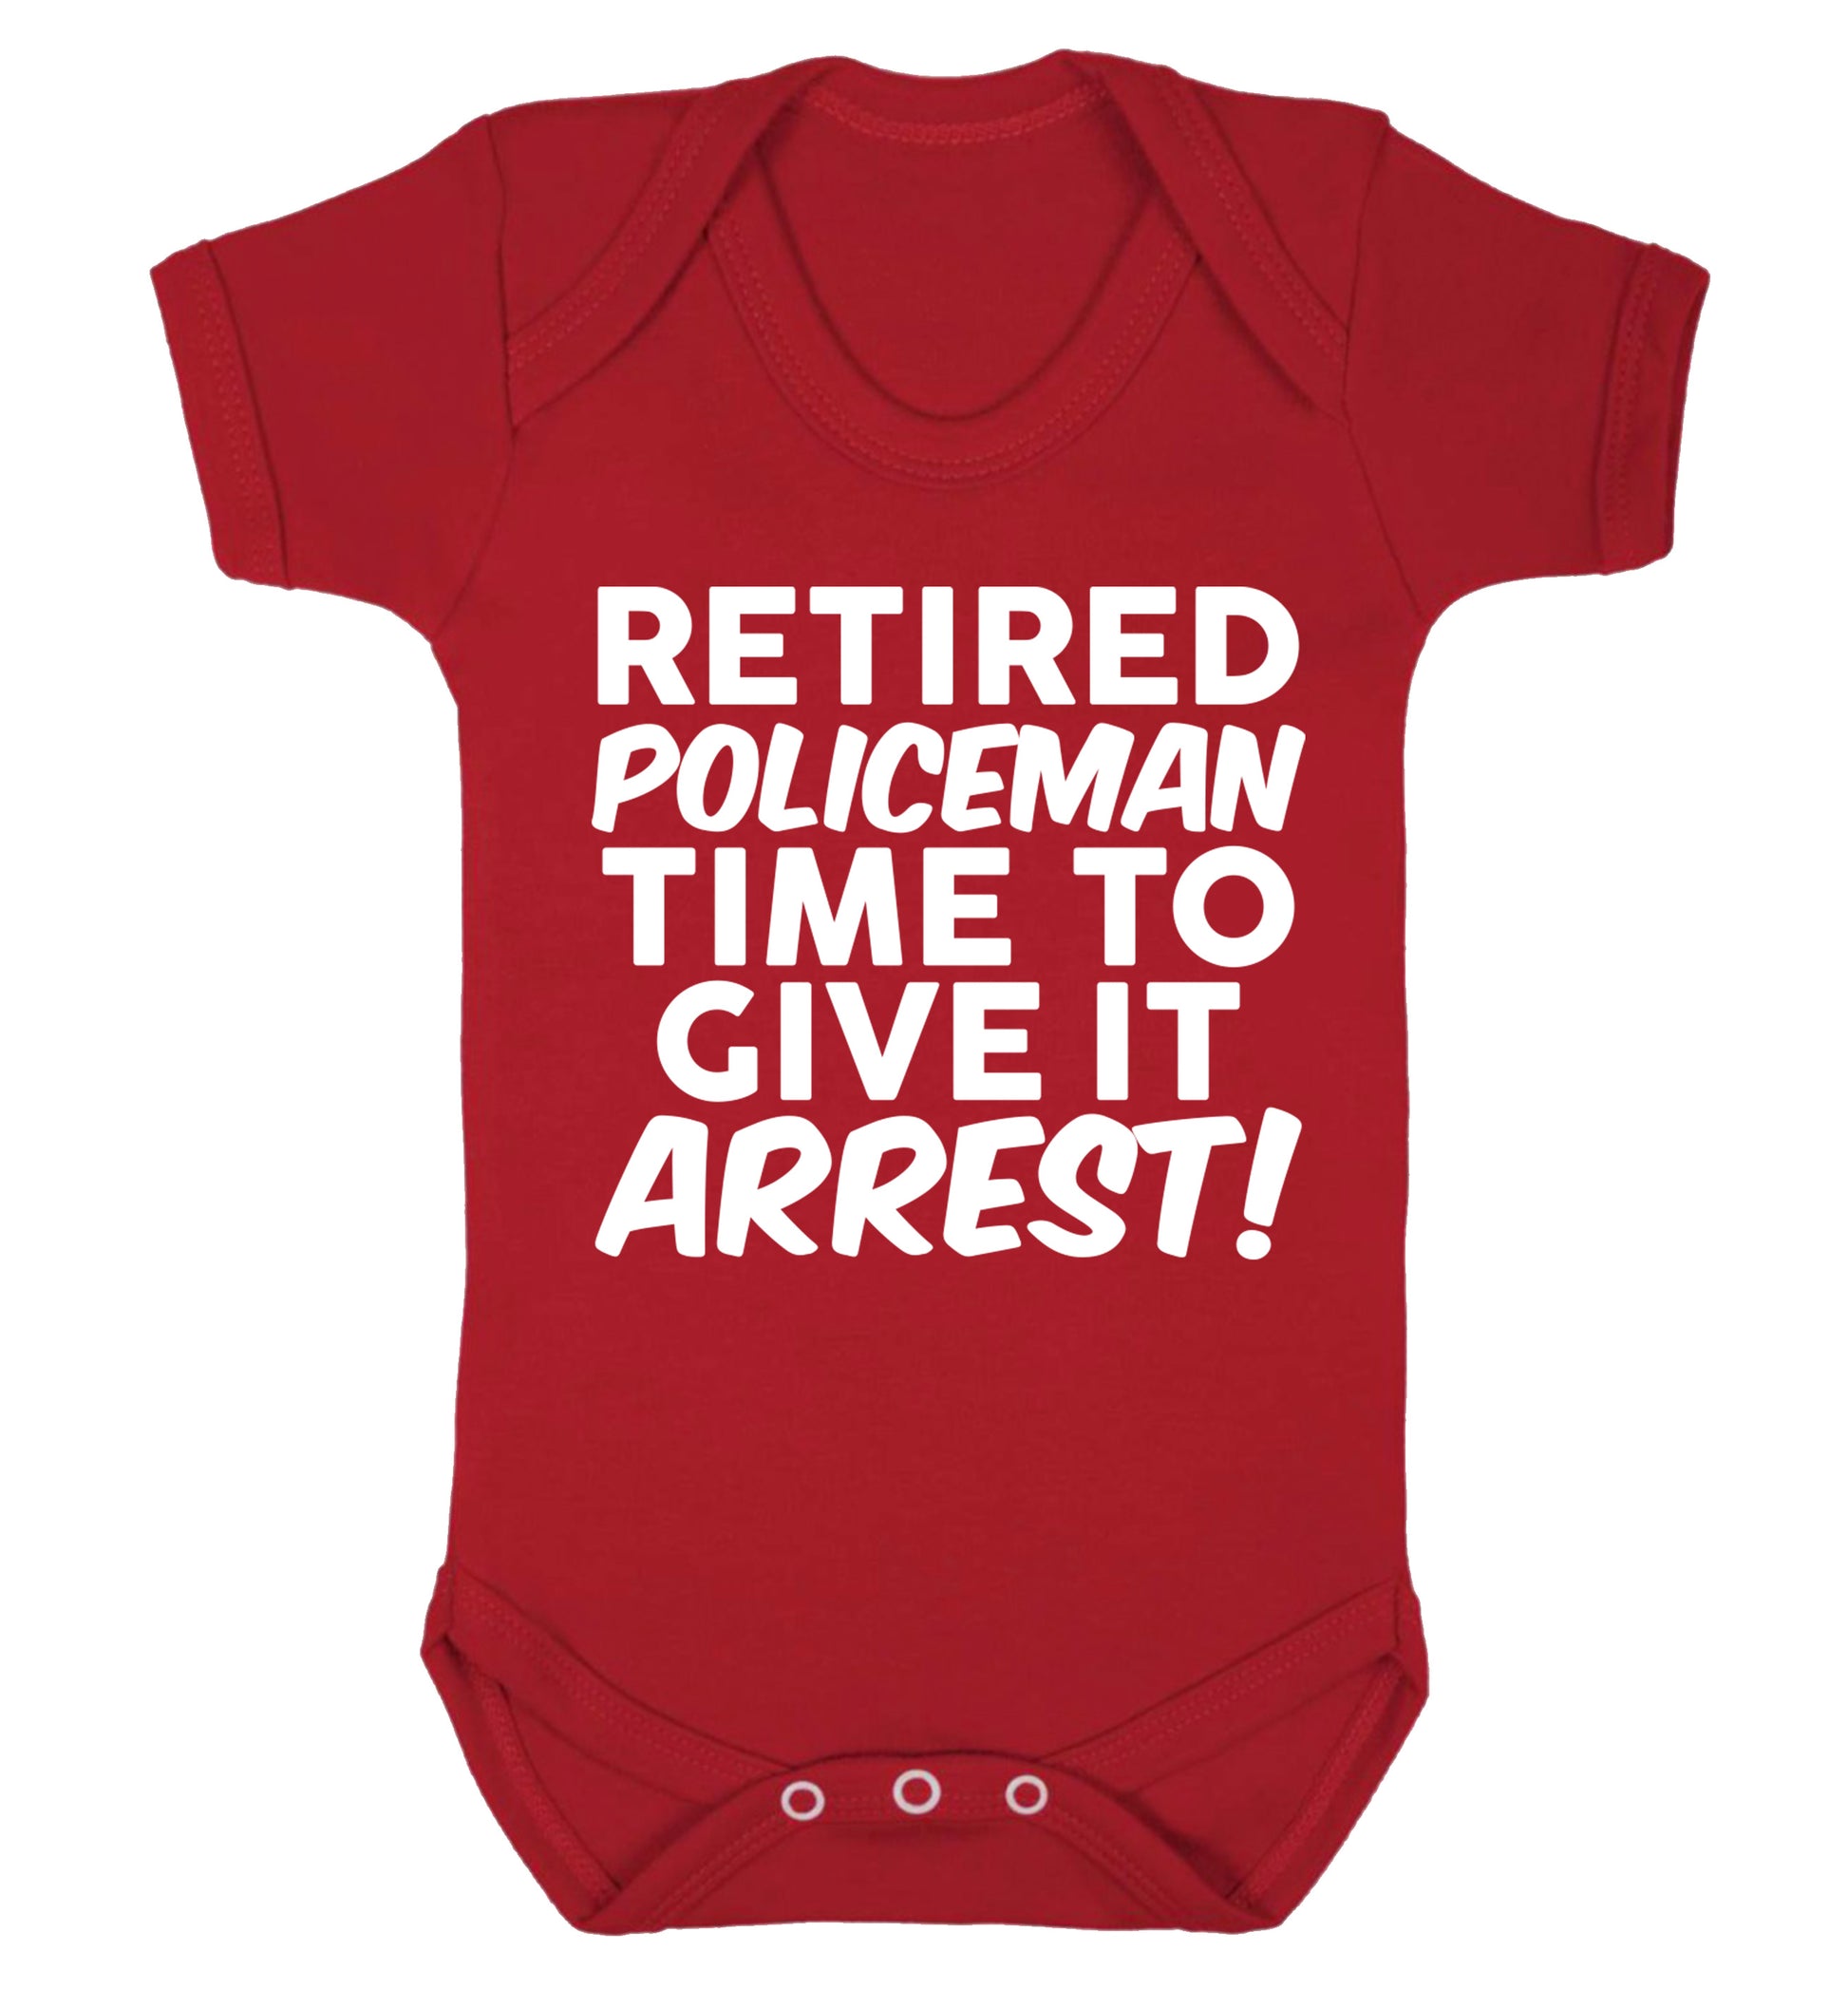 Retired policeman give it arresst! Baby Vest red 18-24 months